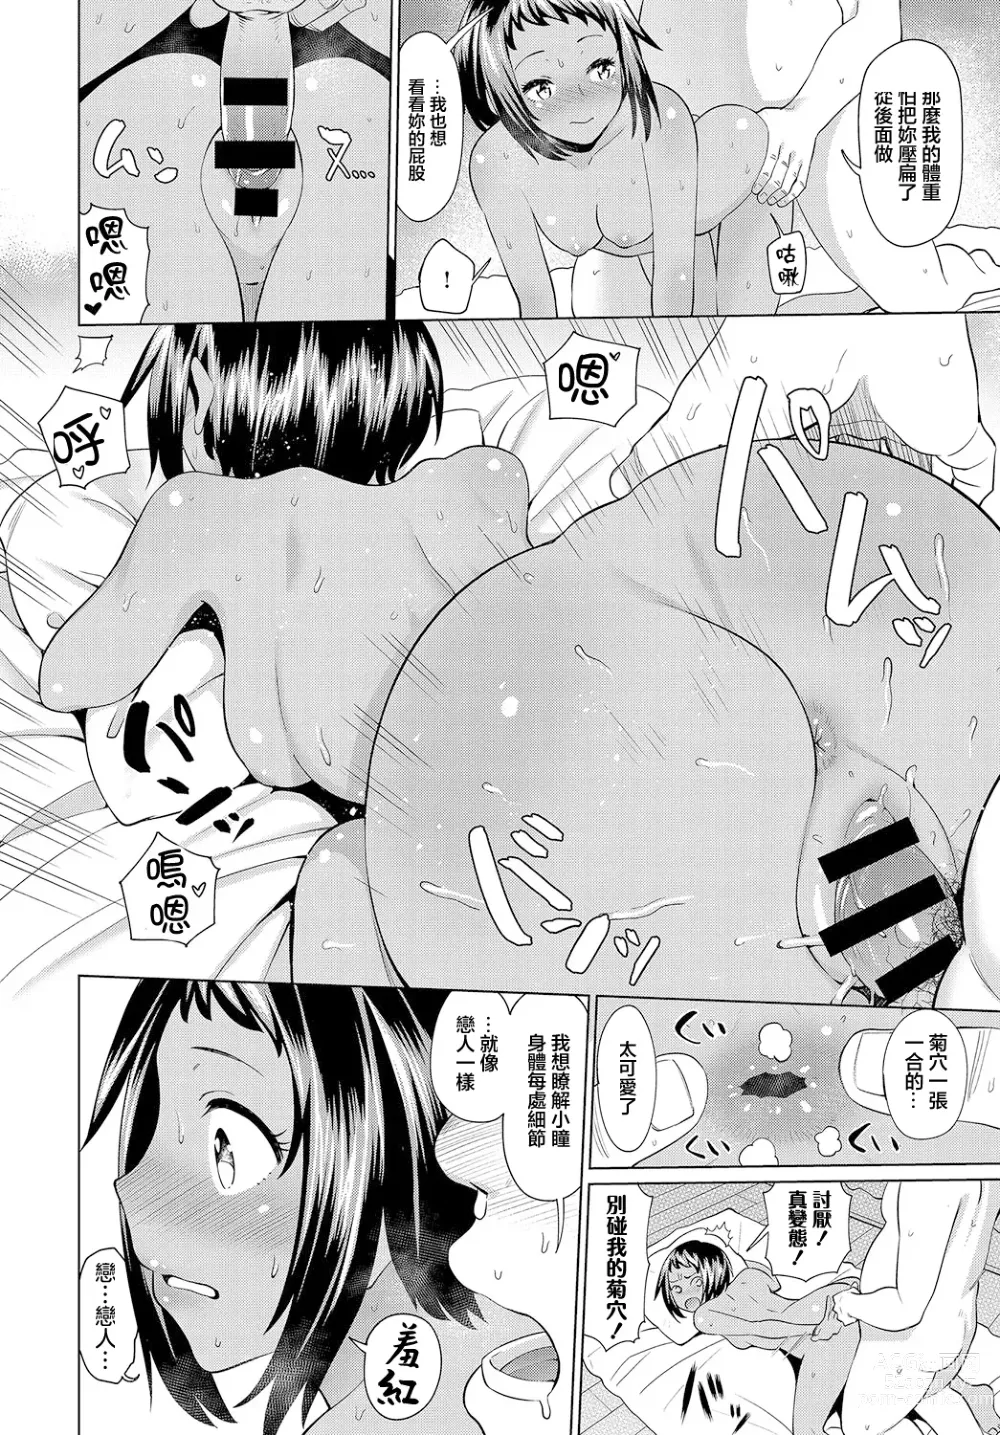 Page 16 of manga Mei no Natsuyasumi